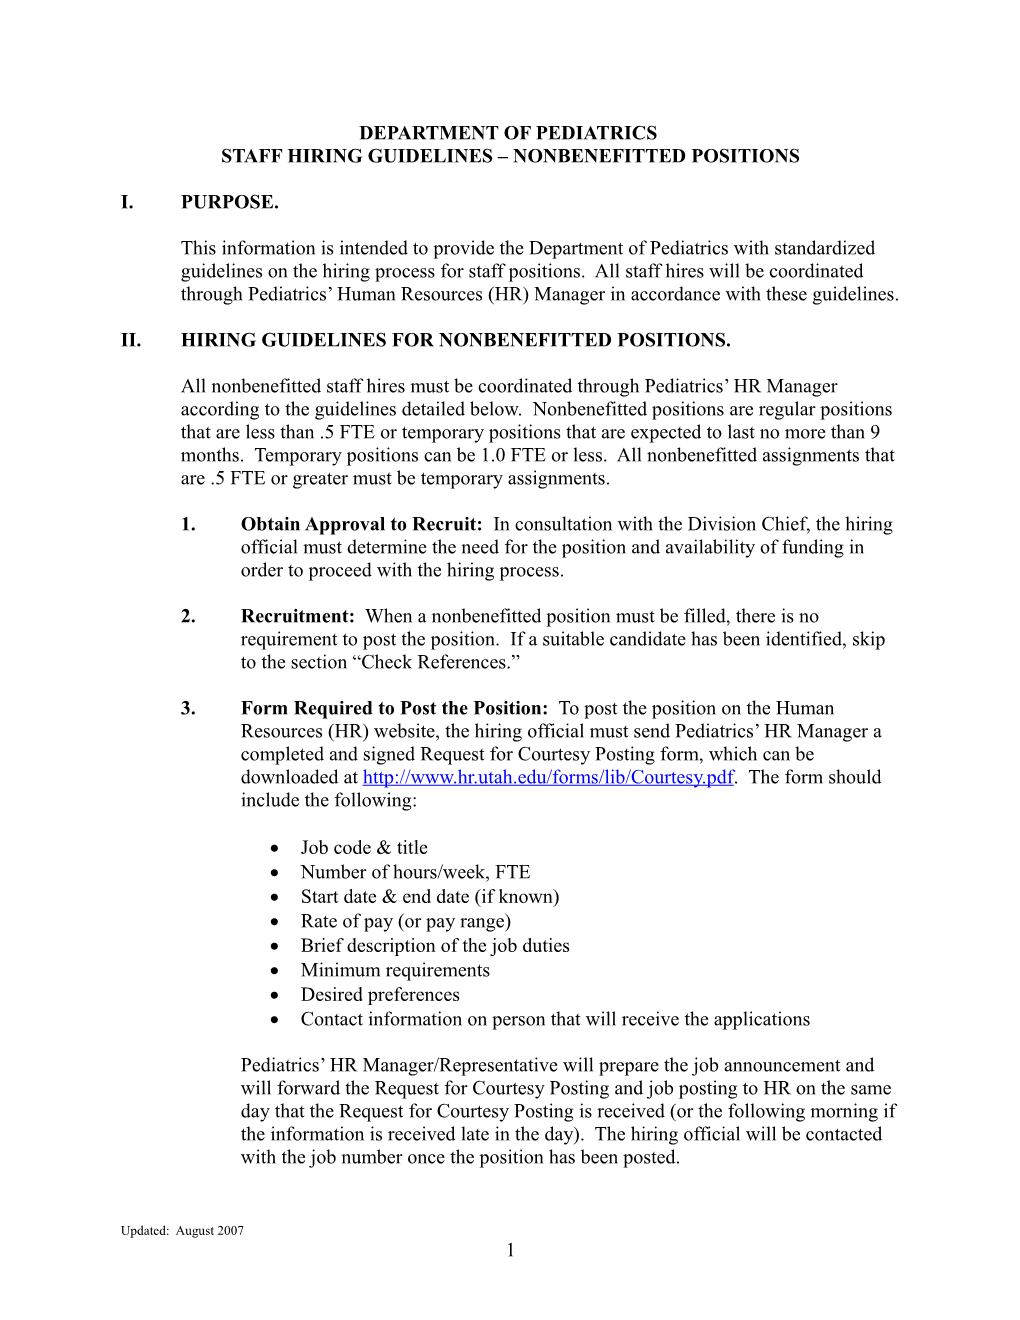 Subject: Department of Pediatrics Hiring Guidelines